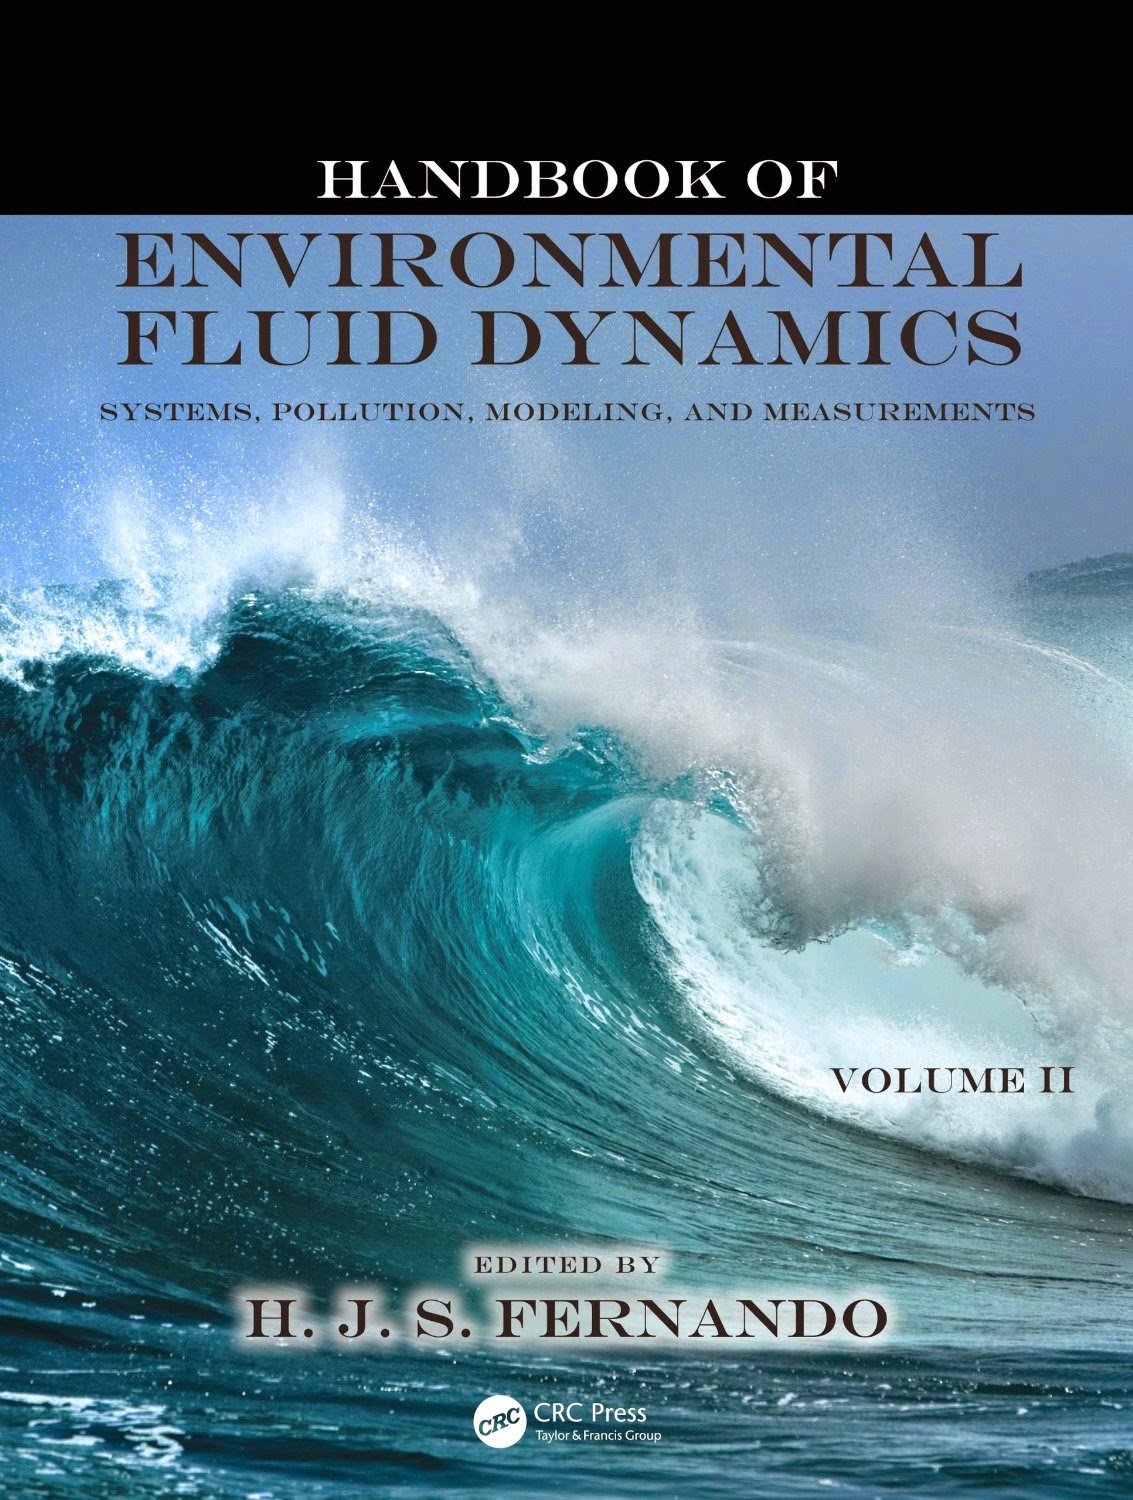 http://kingcheapebook.blogspot.com/2014/08/handbook-of-environmental-fluid.html